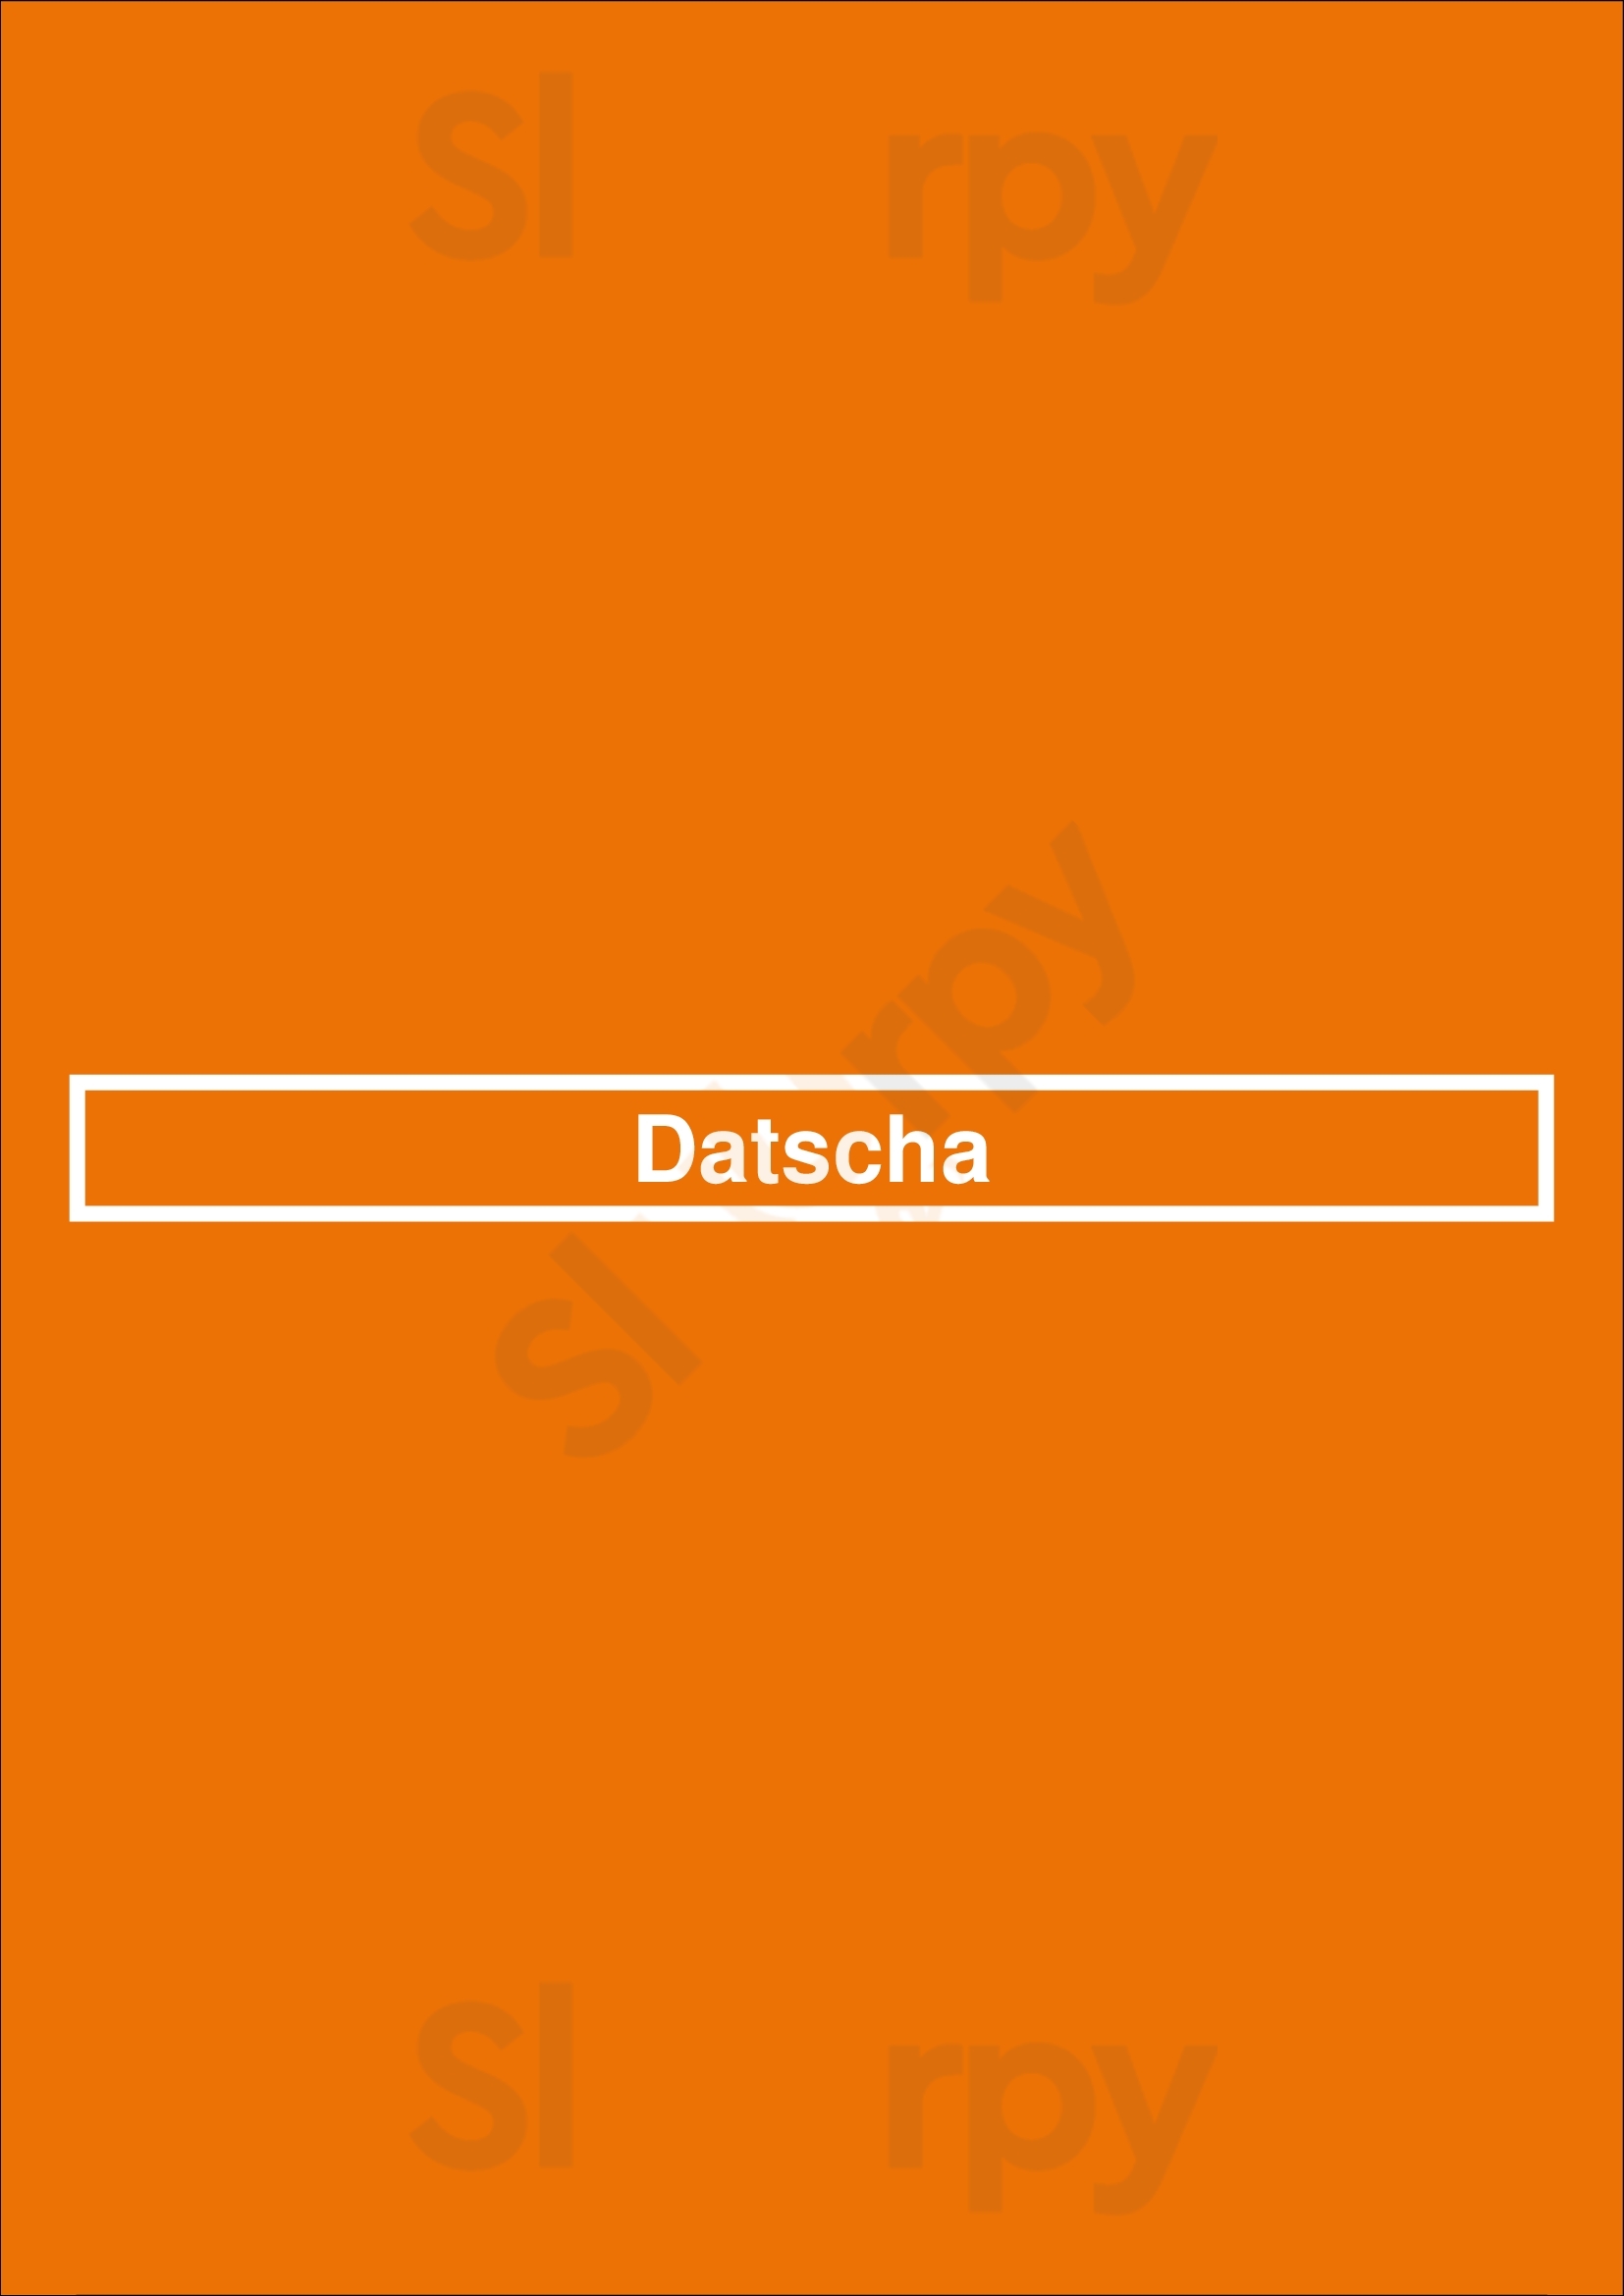 Datscha Berlin Menu - 1